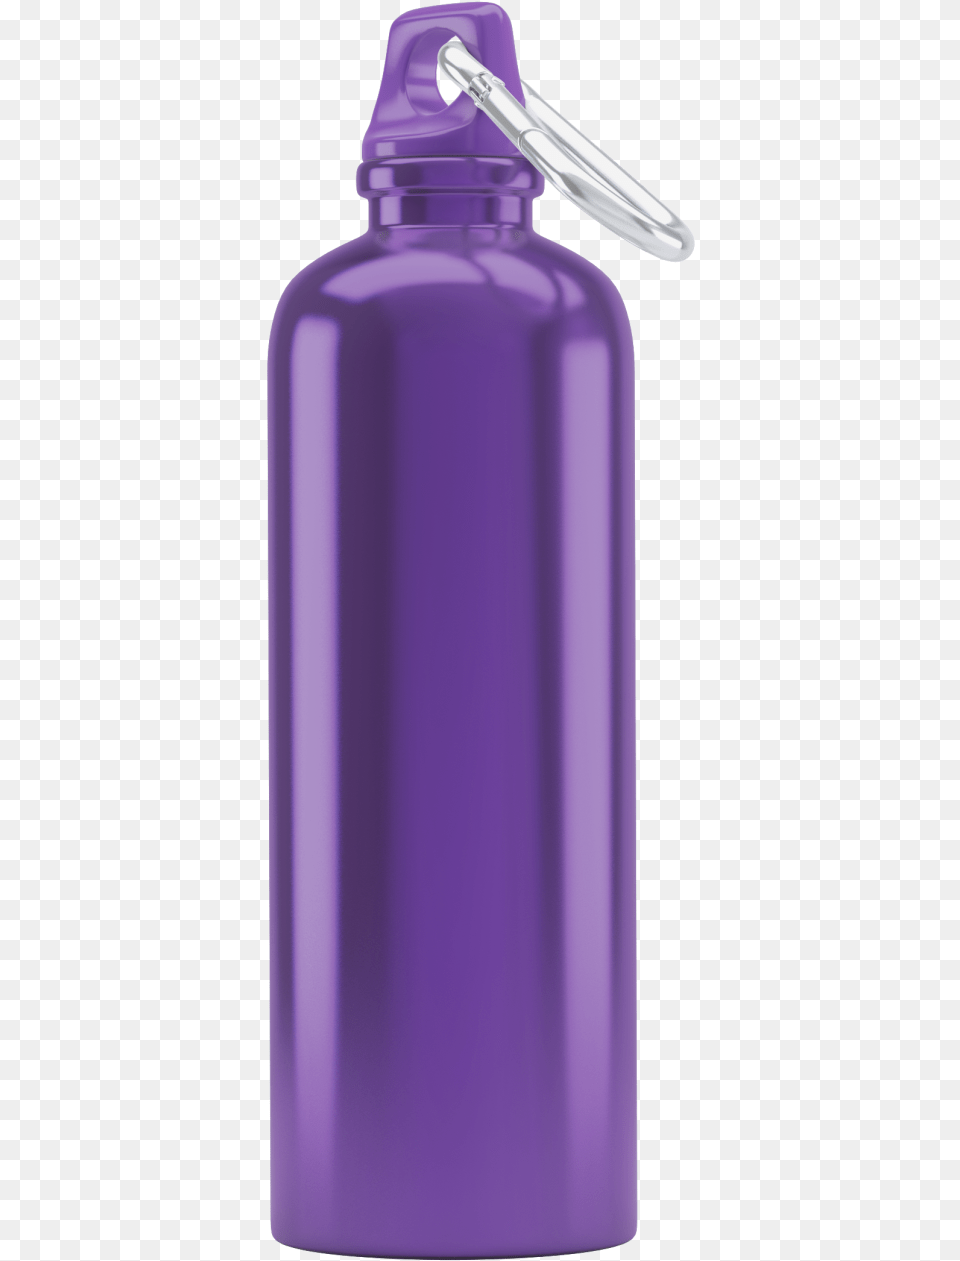 Grape Water Bottle 5 X 5 Water Bottle, Water Bottle, Shaker, Purple Free Transparent Png